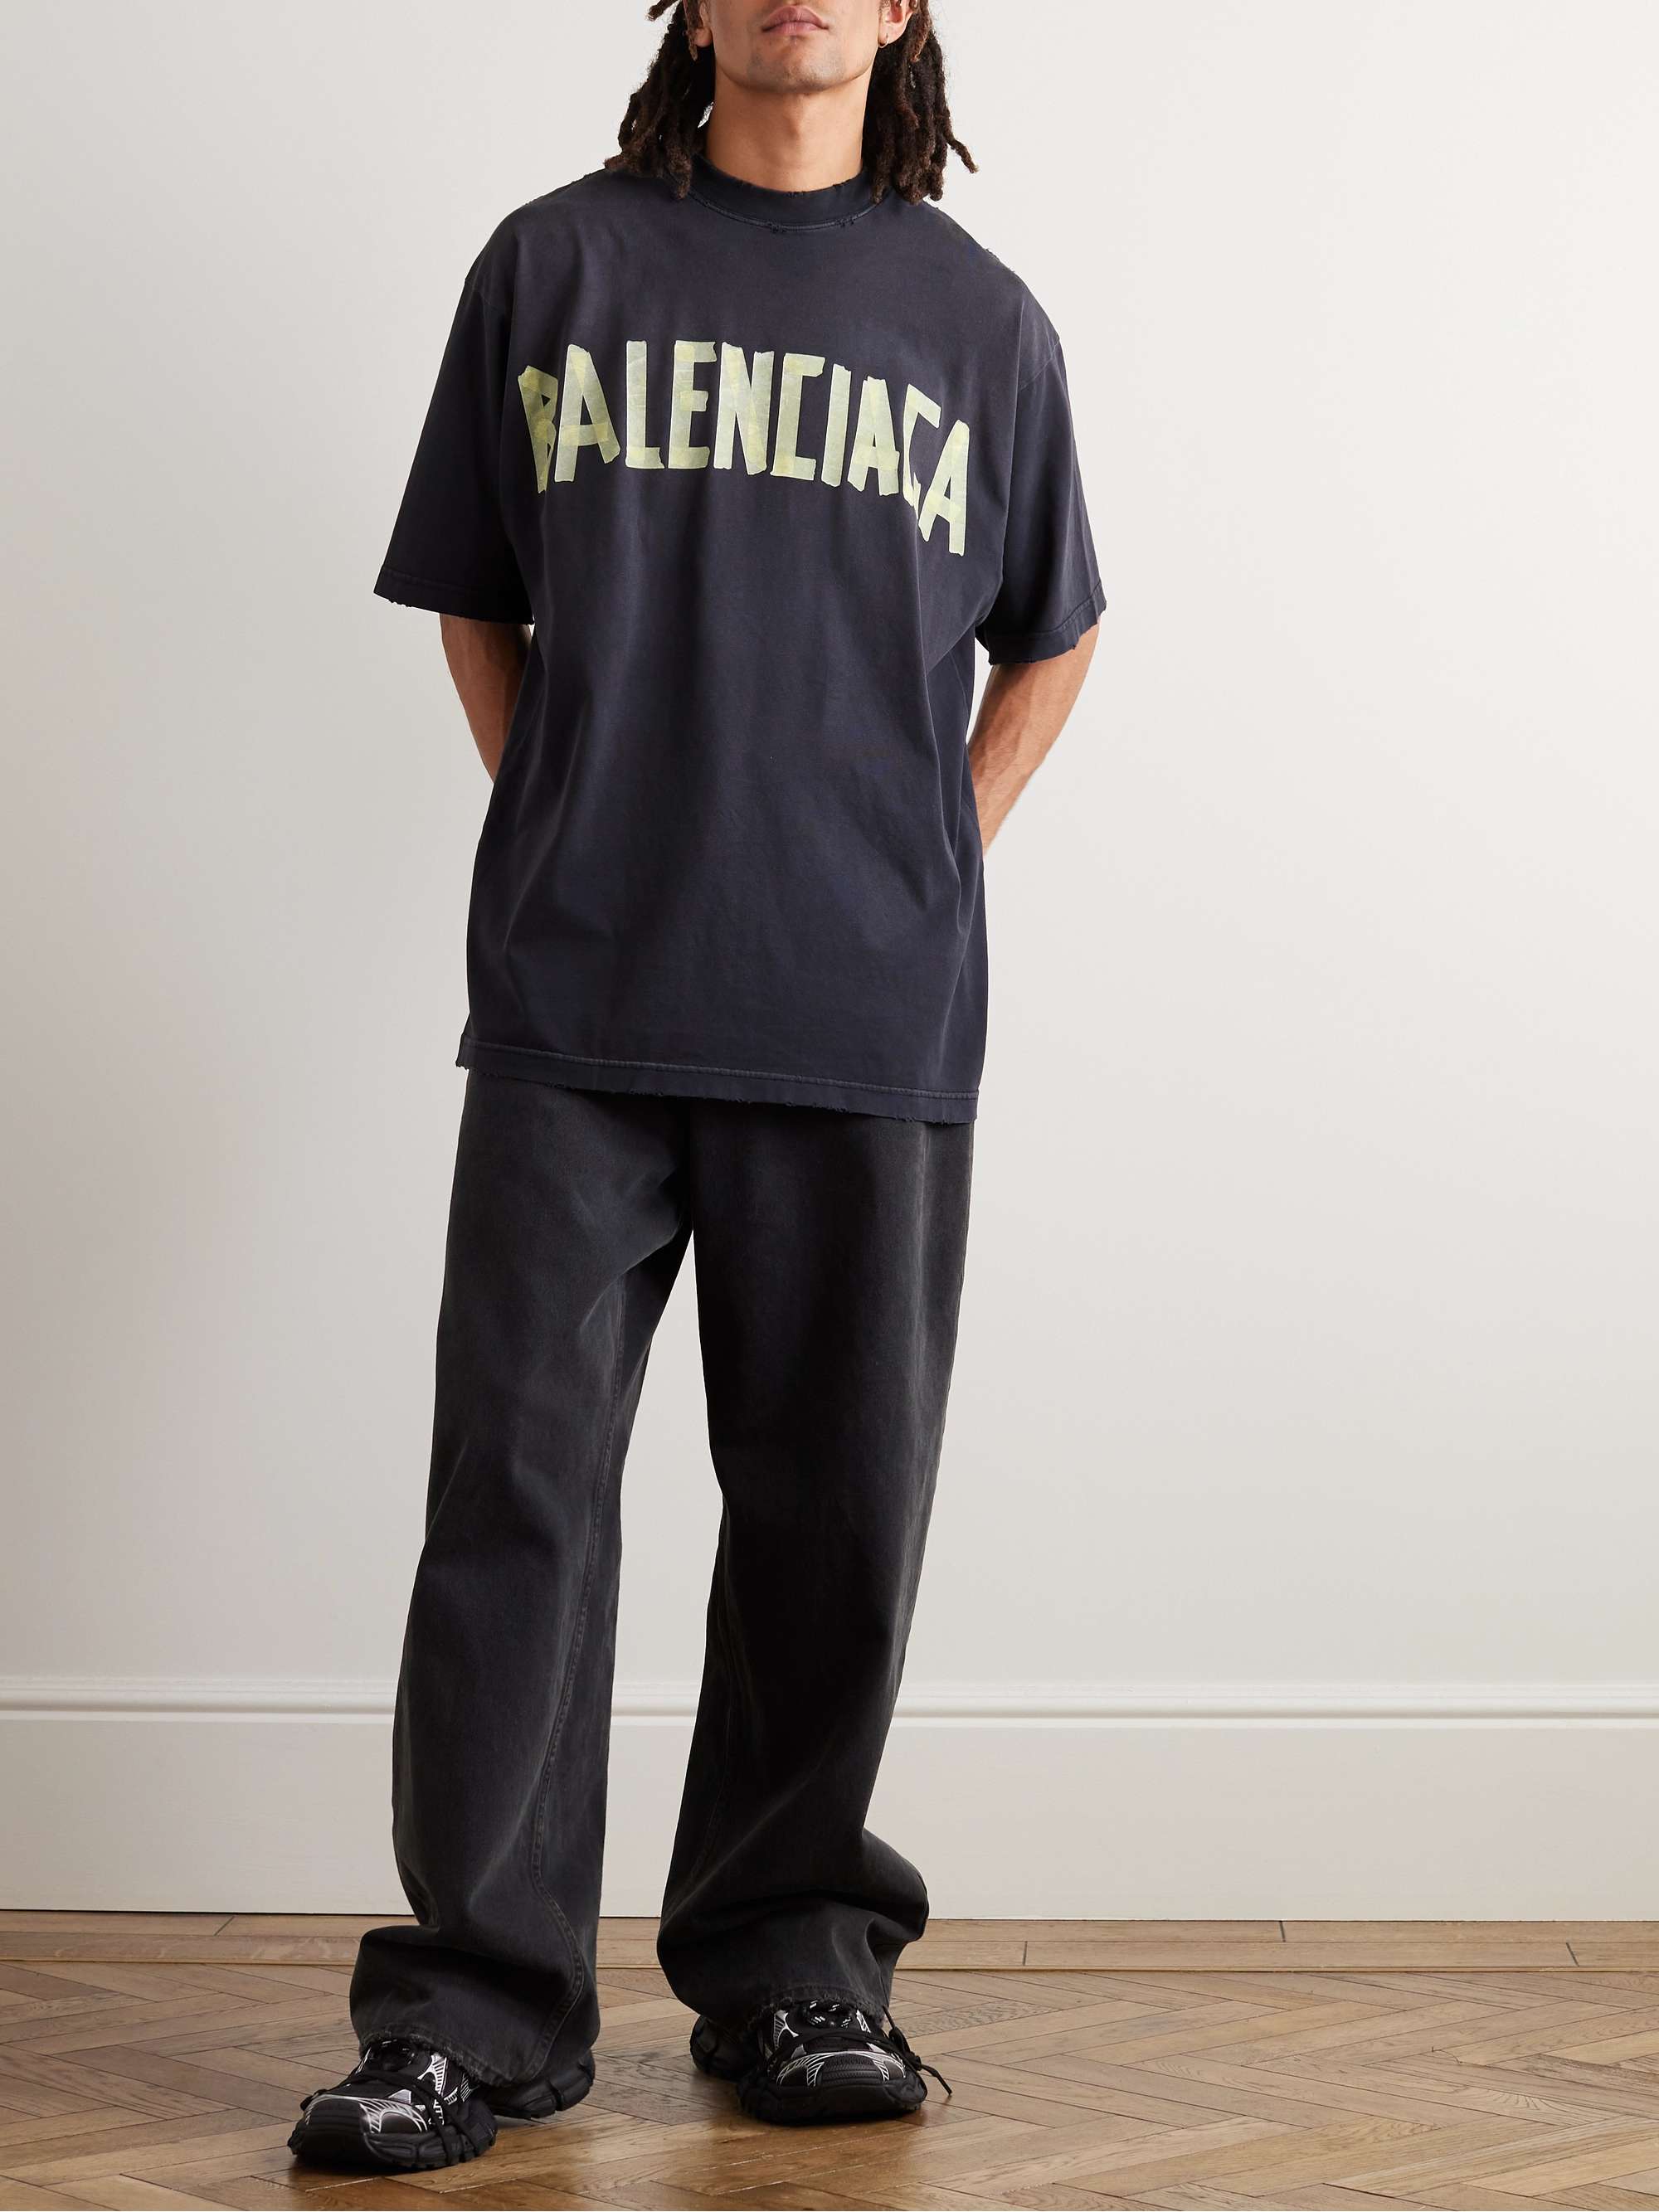 『BALENCIAGA』バレンシアガ (S) オーバーサイズ プリントTシャツ